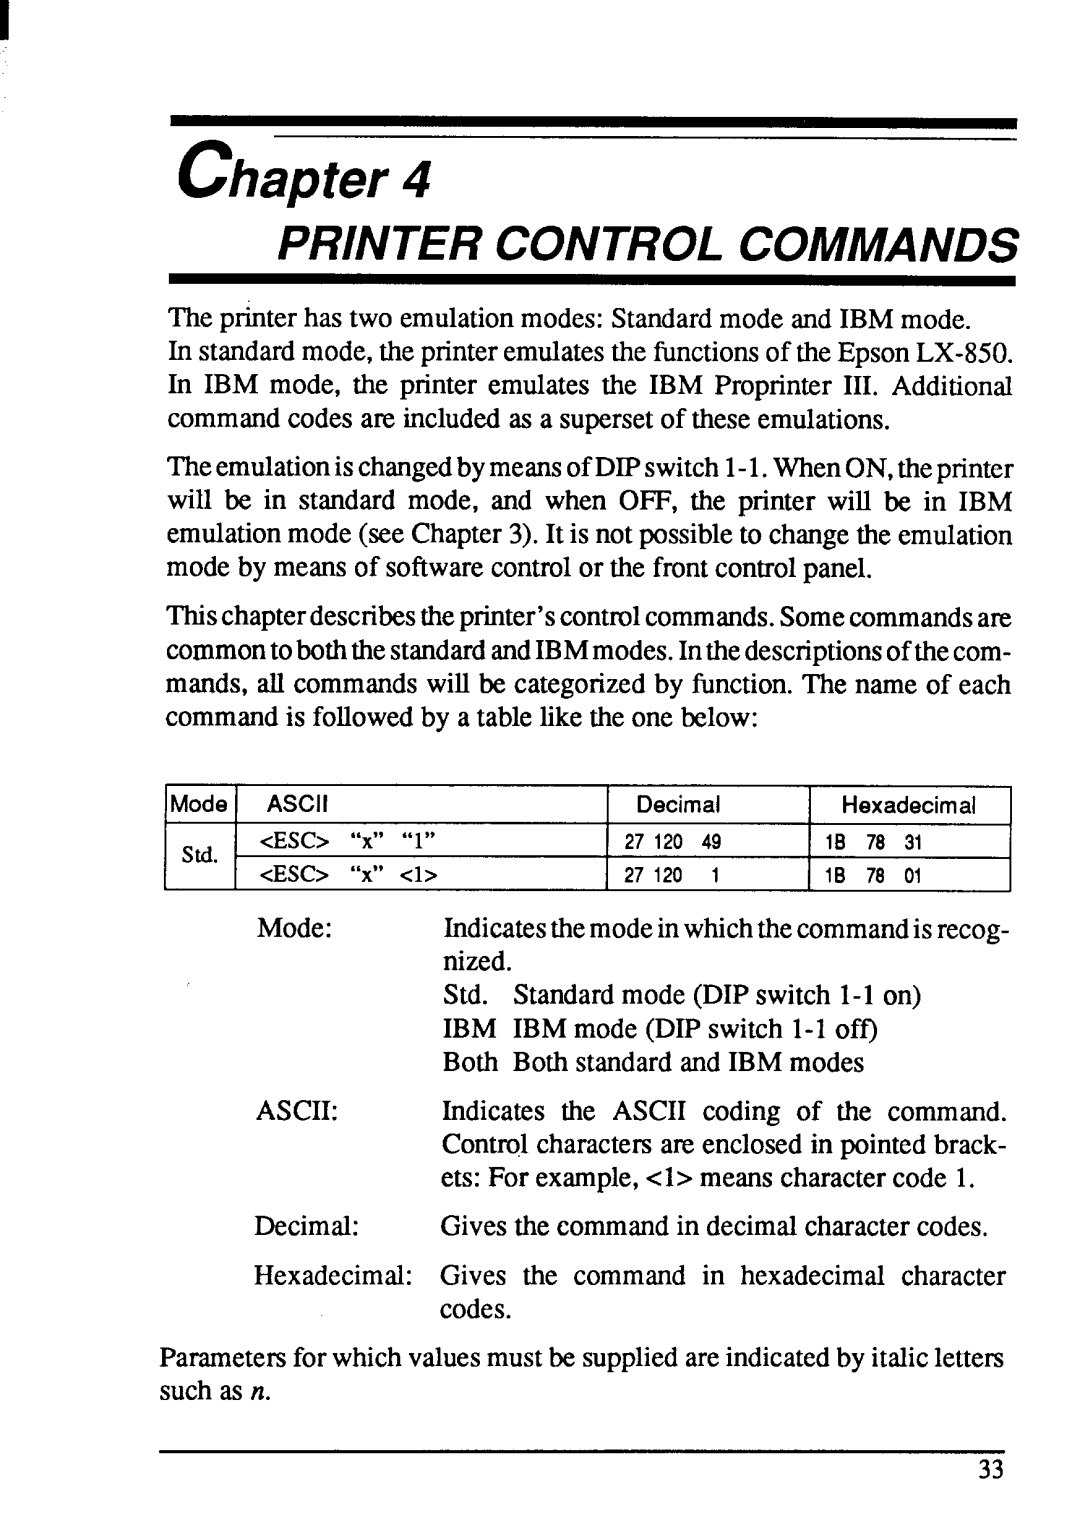 Star Micronics NX-1001 manual Printer Control Commands 